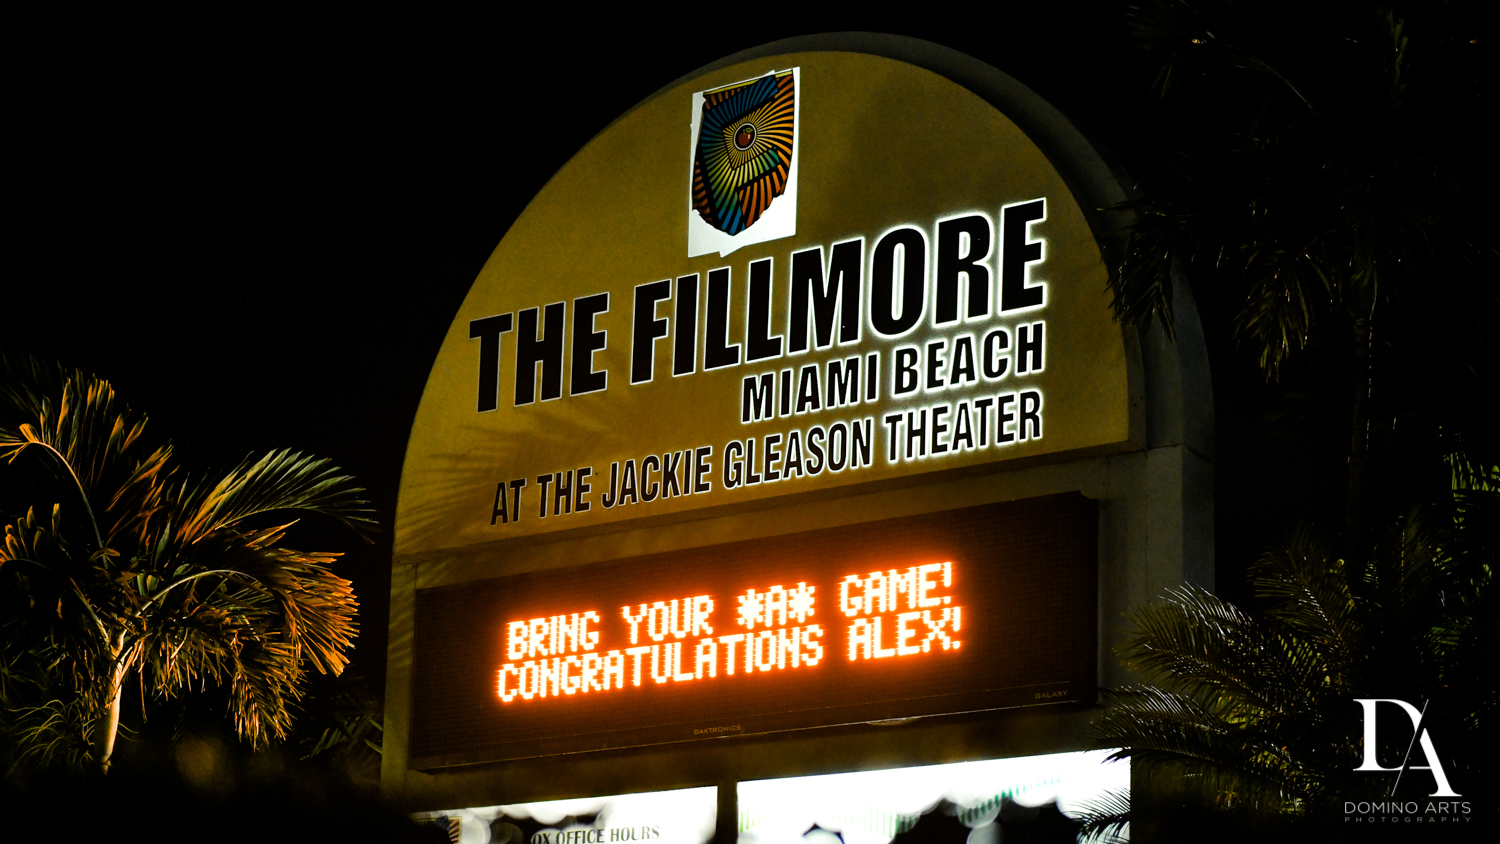 Fun Basketball Theme Bar Mitzvah at The Fillmore Miami Beach by Domino Arts Photography